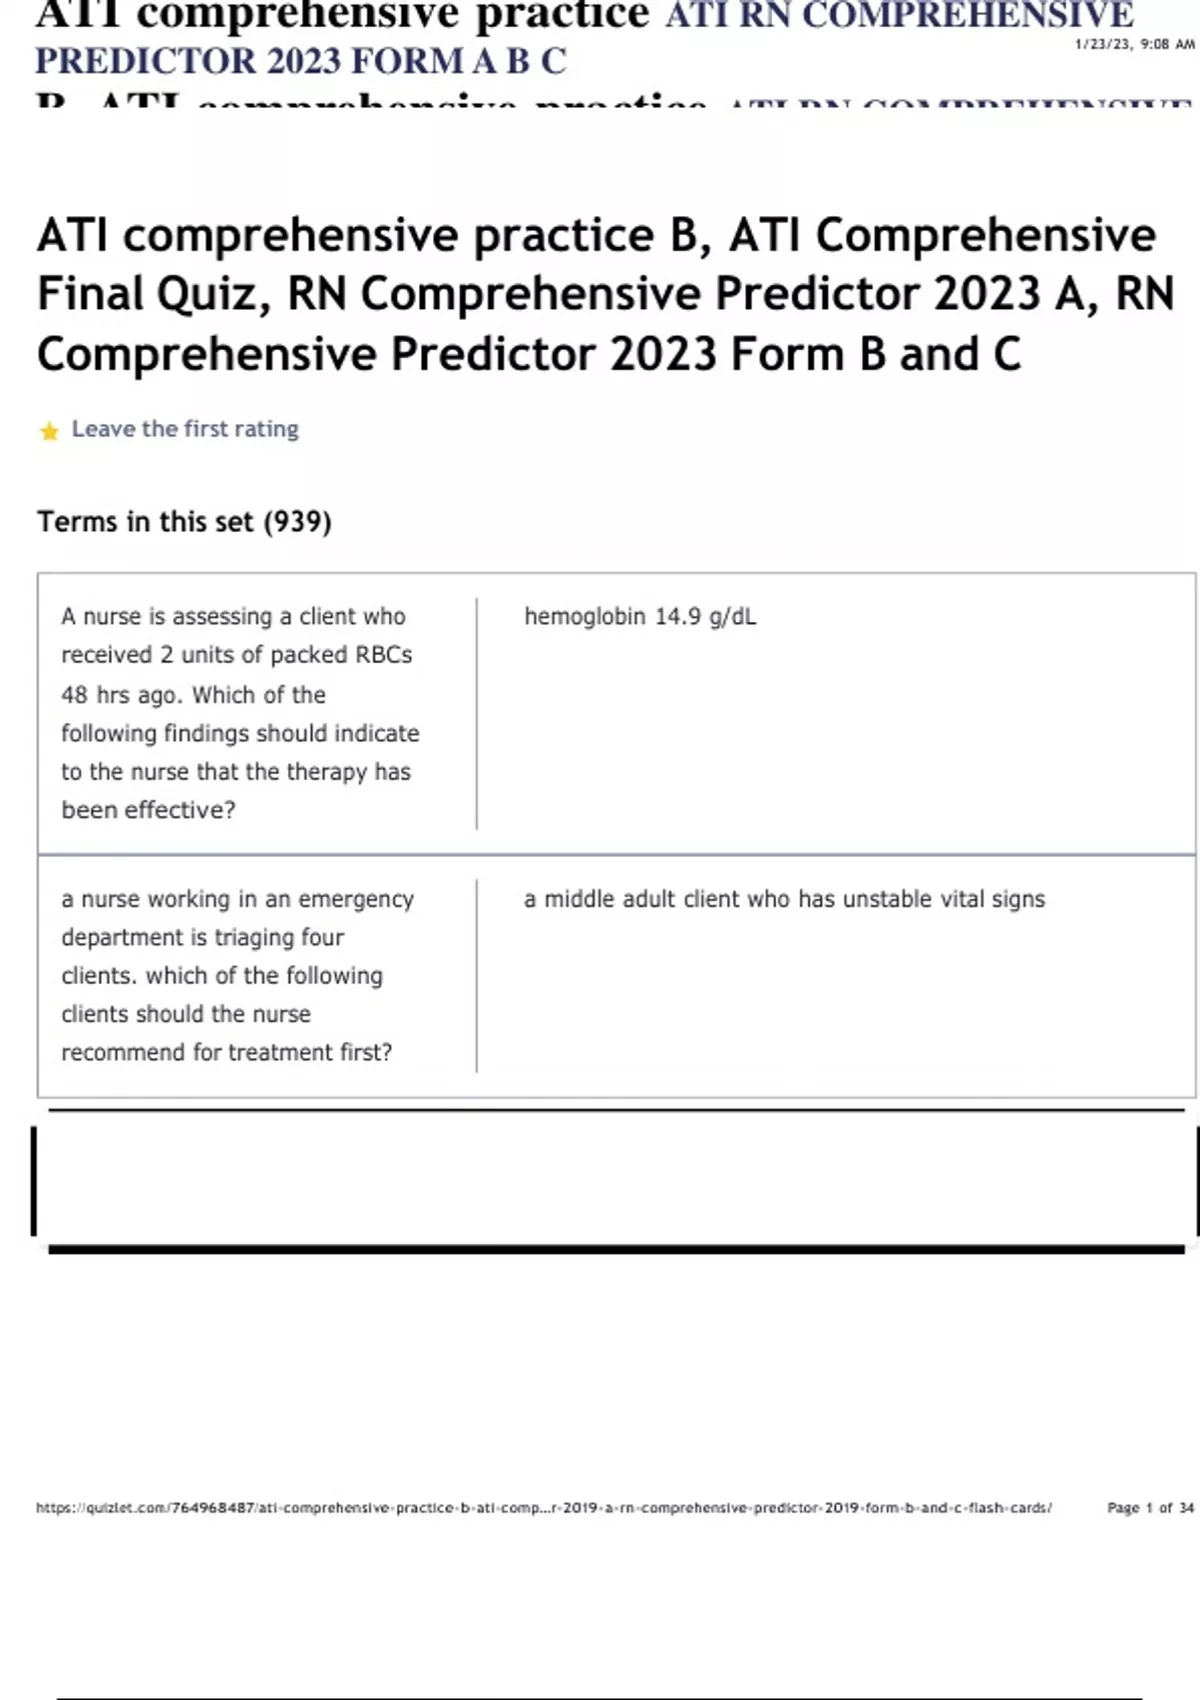 ATI comprehensive practice ATI RN COMPREHENSIVE PREDICTOR 2023 FORM A B